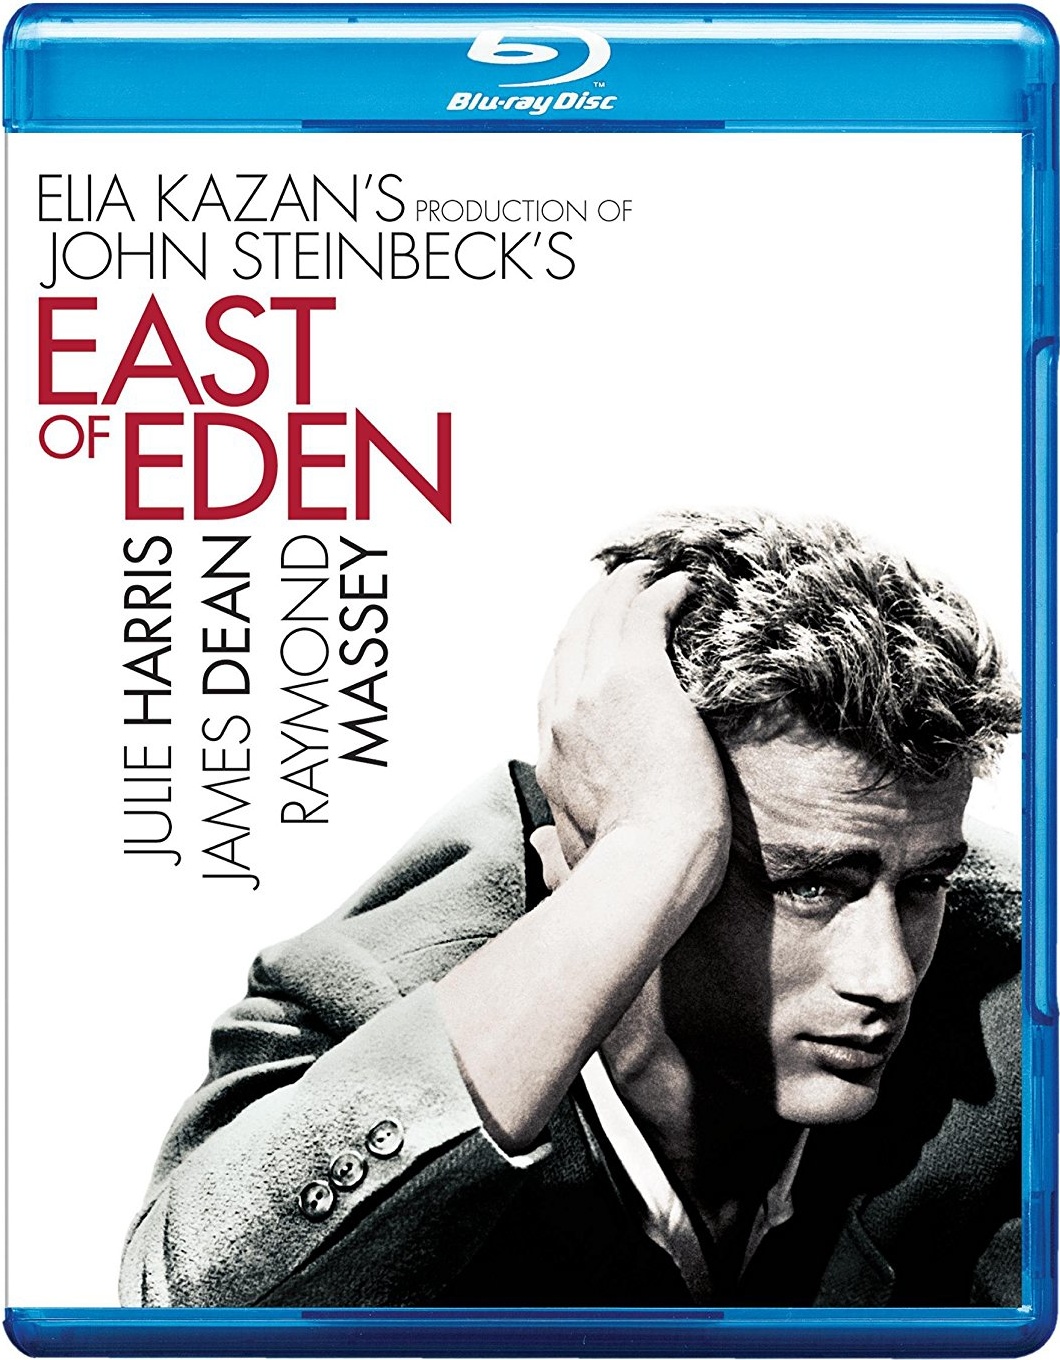 [伊甸园之东].East.of.Eden.1955.BluRay.1080p.AVC.DTS-HD.MA.5.1-NoGroup   40.34G9 L  _3 g# Z5 k$ t, H$ [1 Q; N$ r-2.jpg